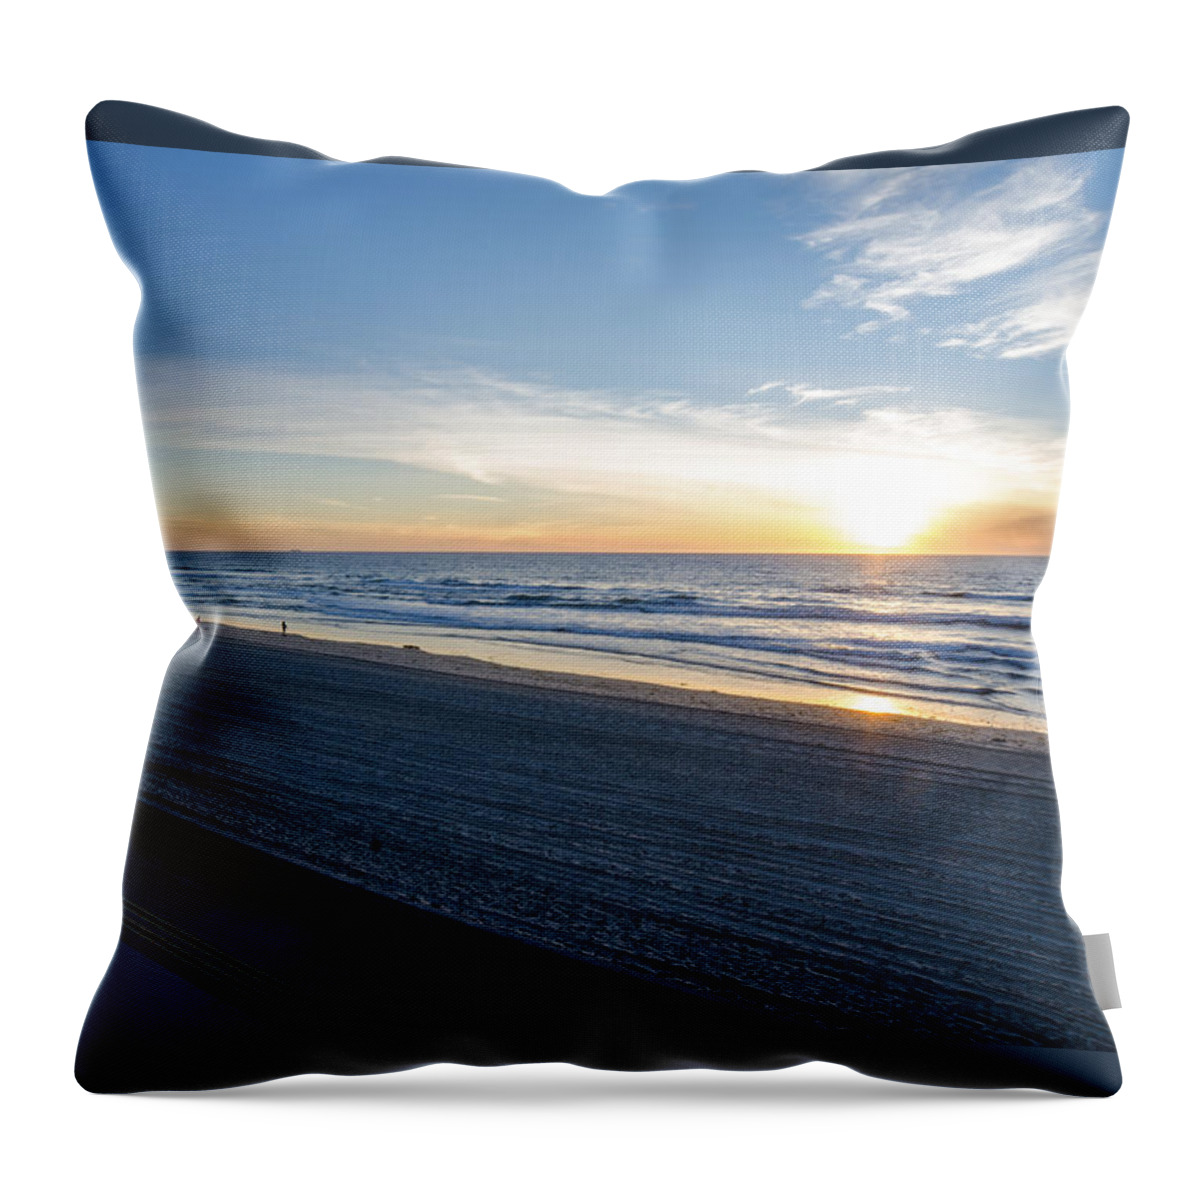 Ocean Front Walk Throw Pillow featuring the photograph Ocean Front Walk by Susan McMenamin